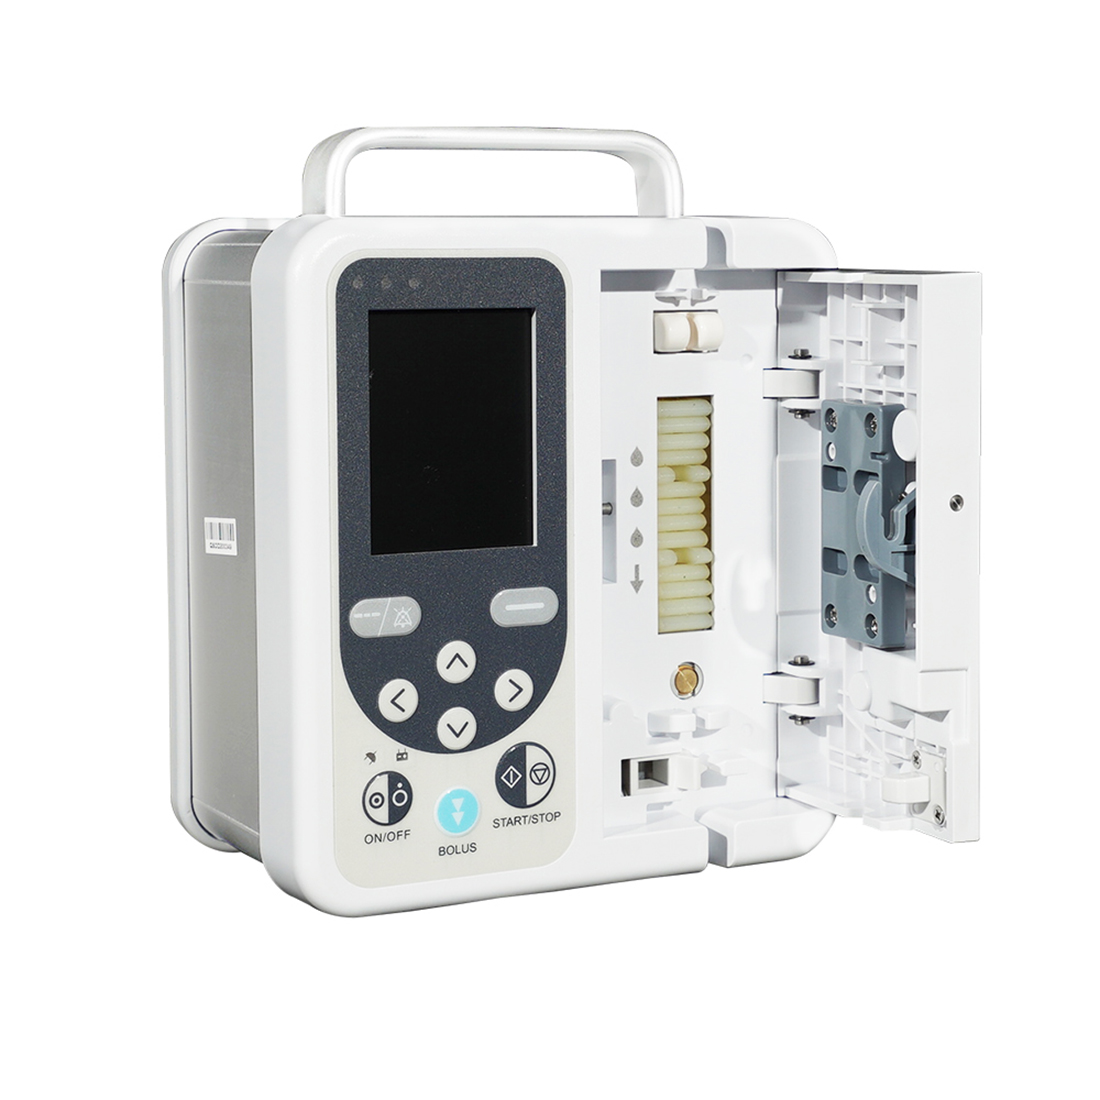 AMAIN Portable Volumetric Infusion Pump AMSP750 Top IV Medical Pump